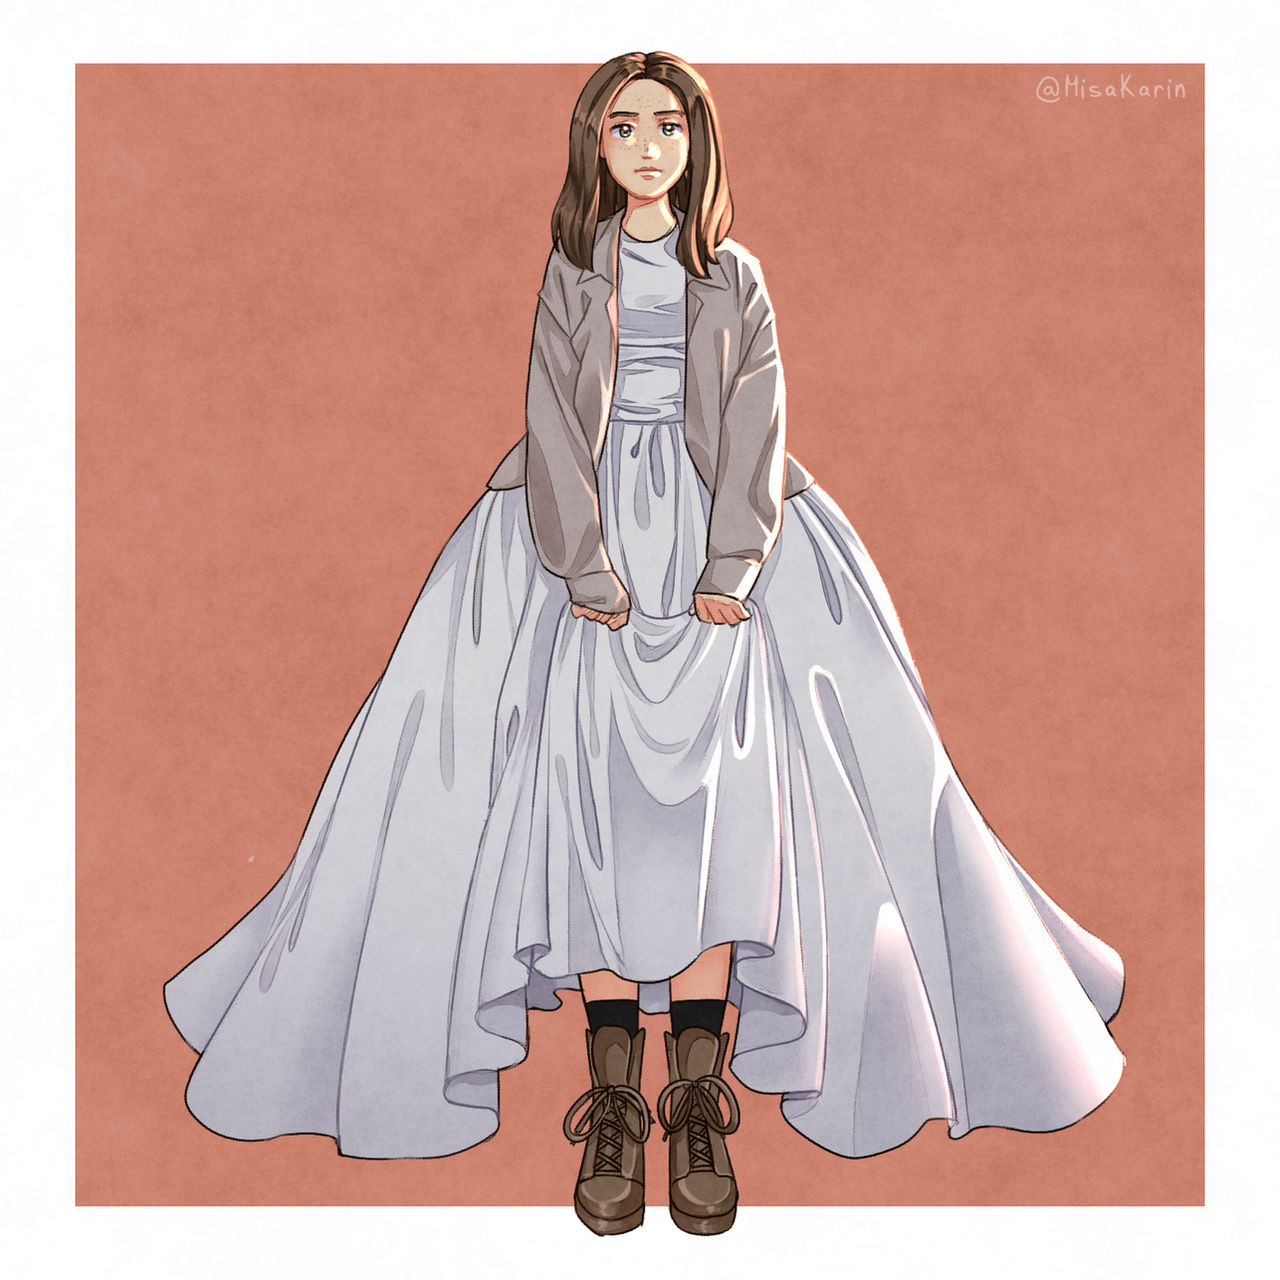 Alyssa in a wedding dress by MisaKarin on DeviantArt